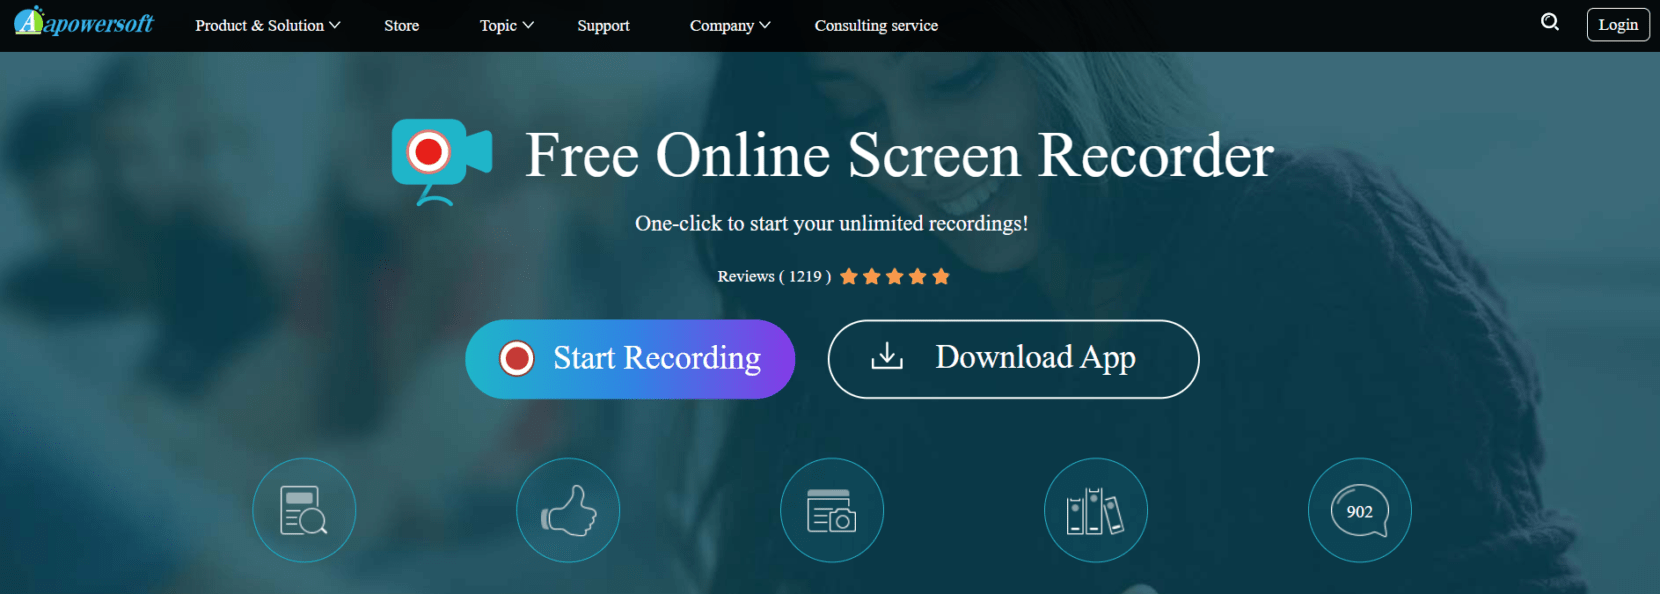 5 Best Free Screen Recording Tools